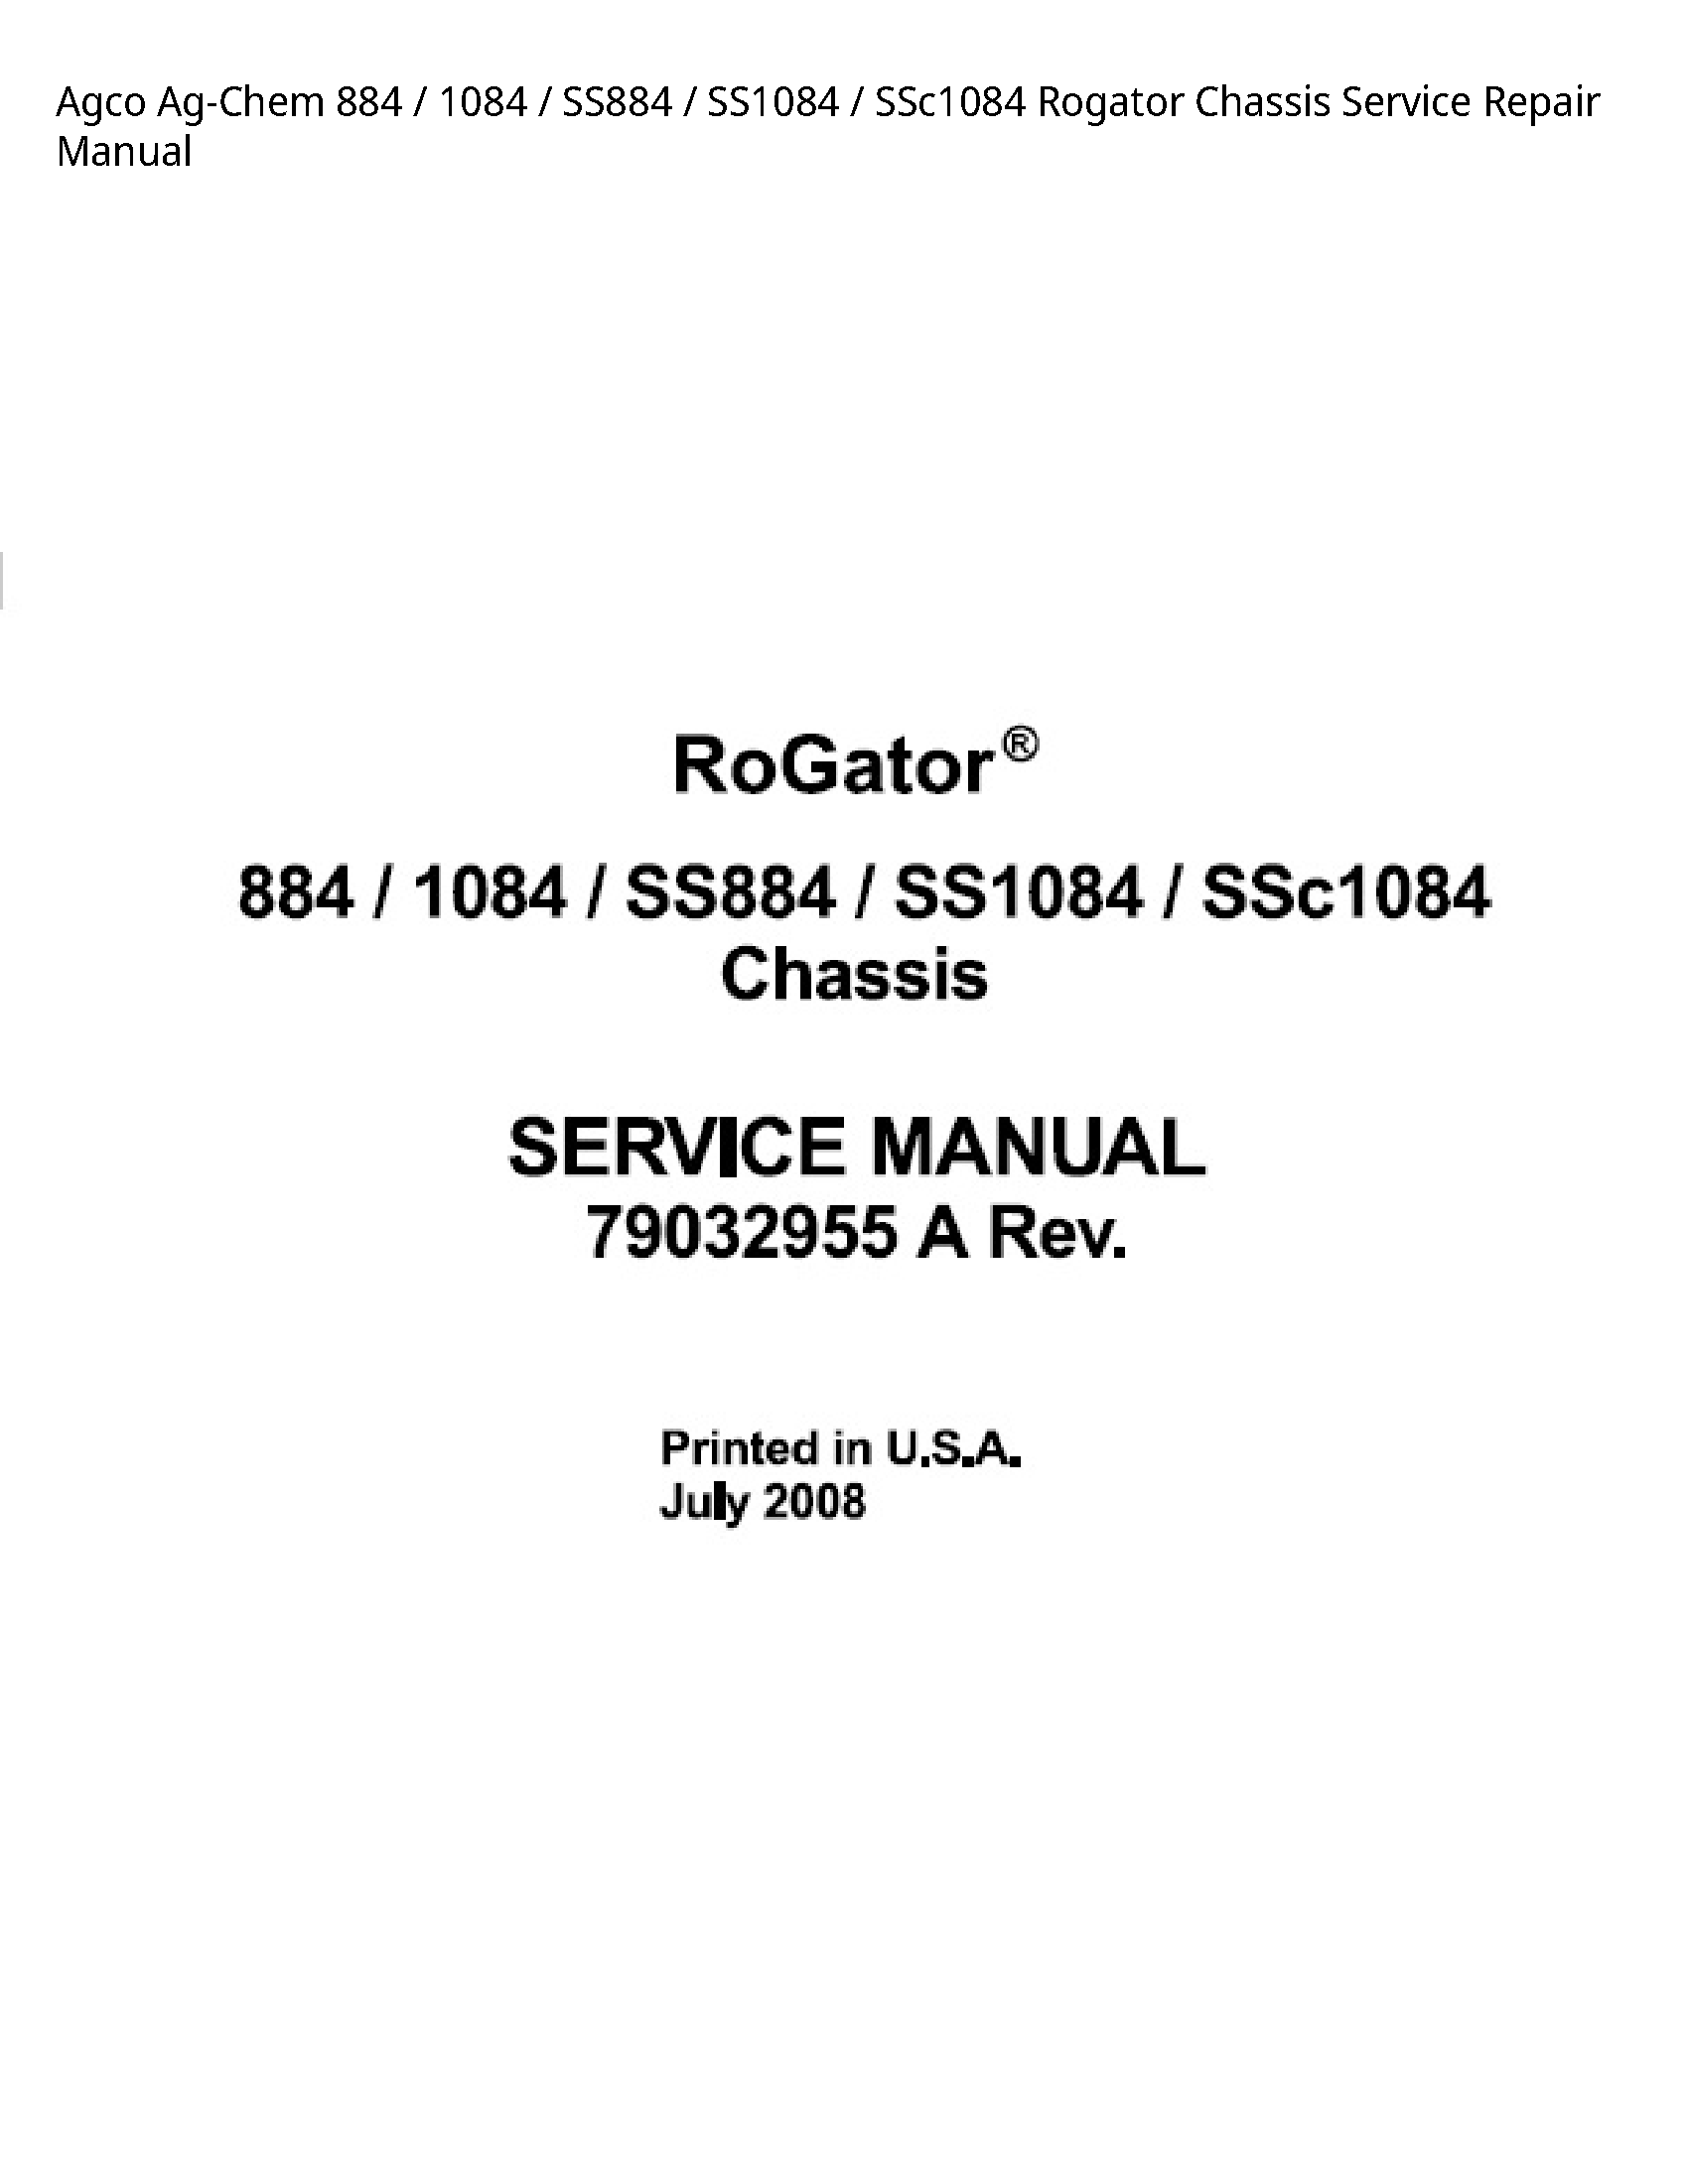 AGCO 884 Ag-Chem Rogator Chassis manual